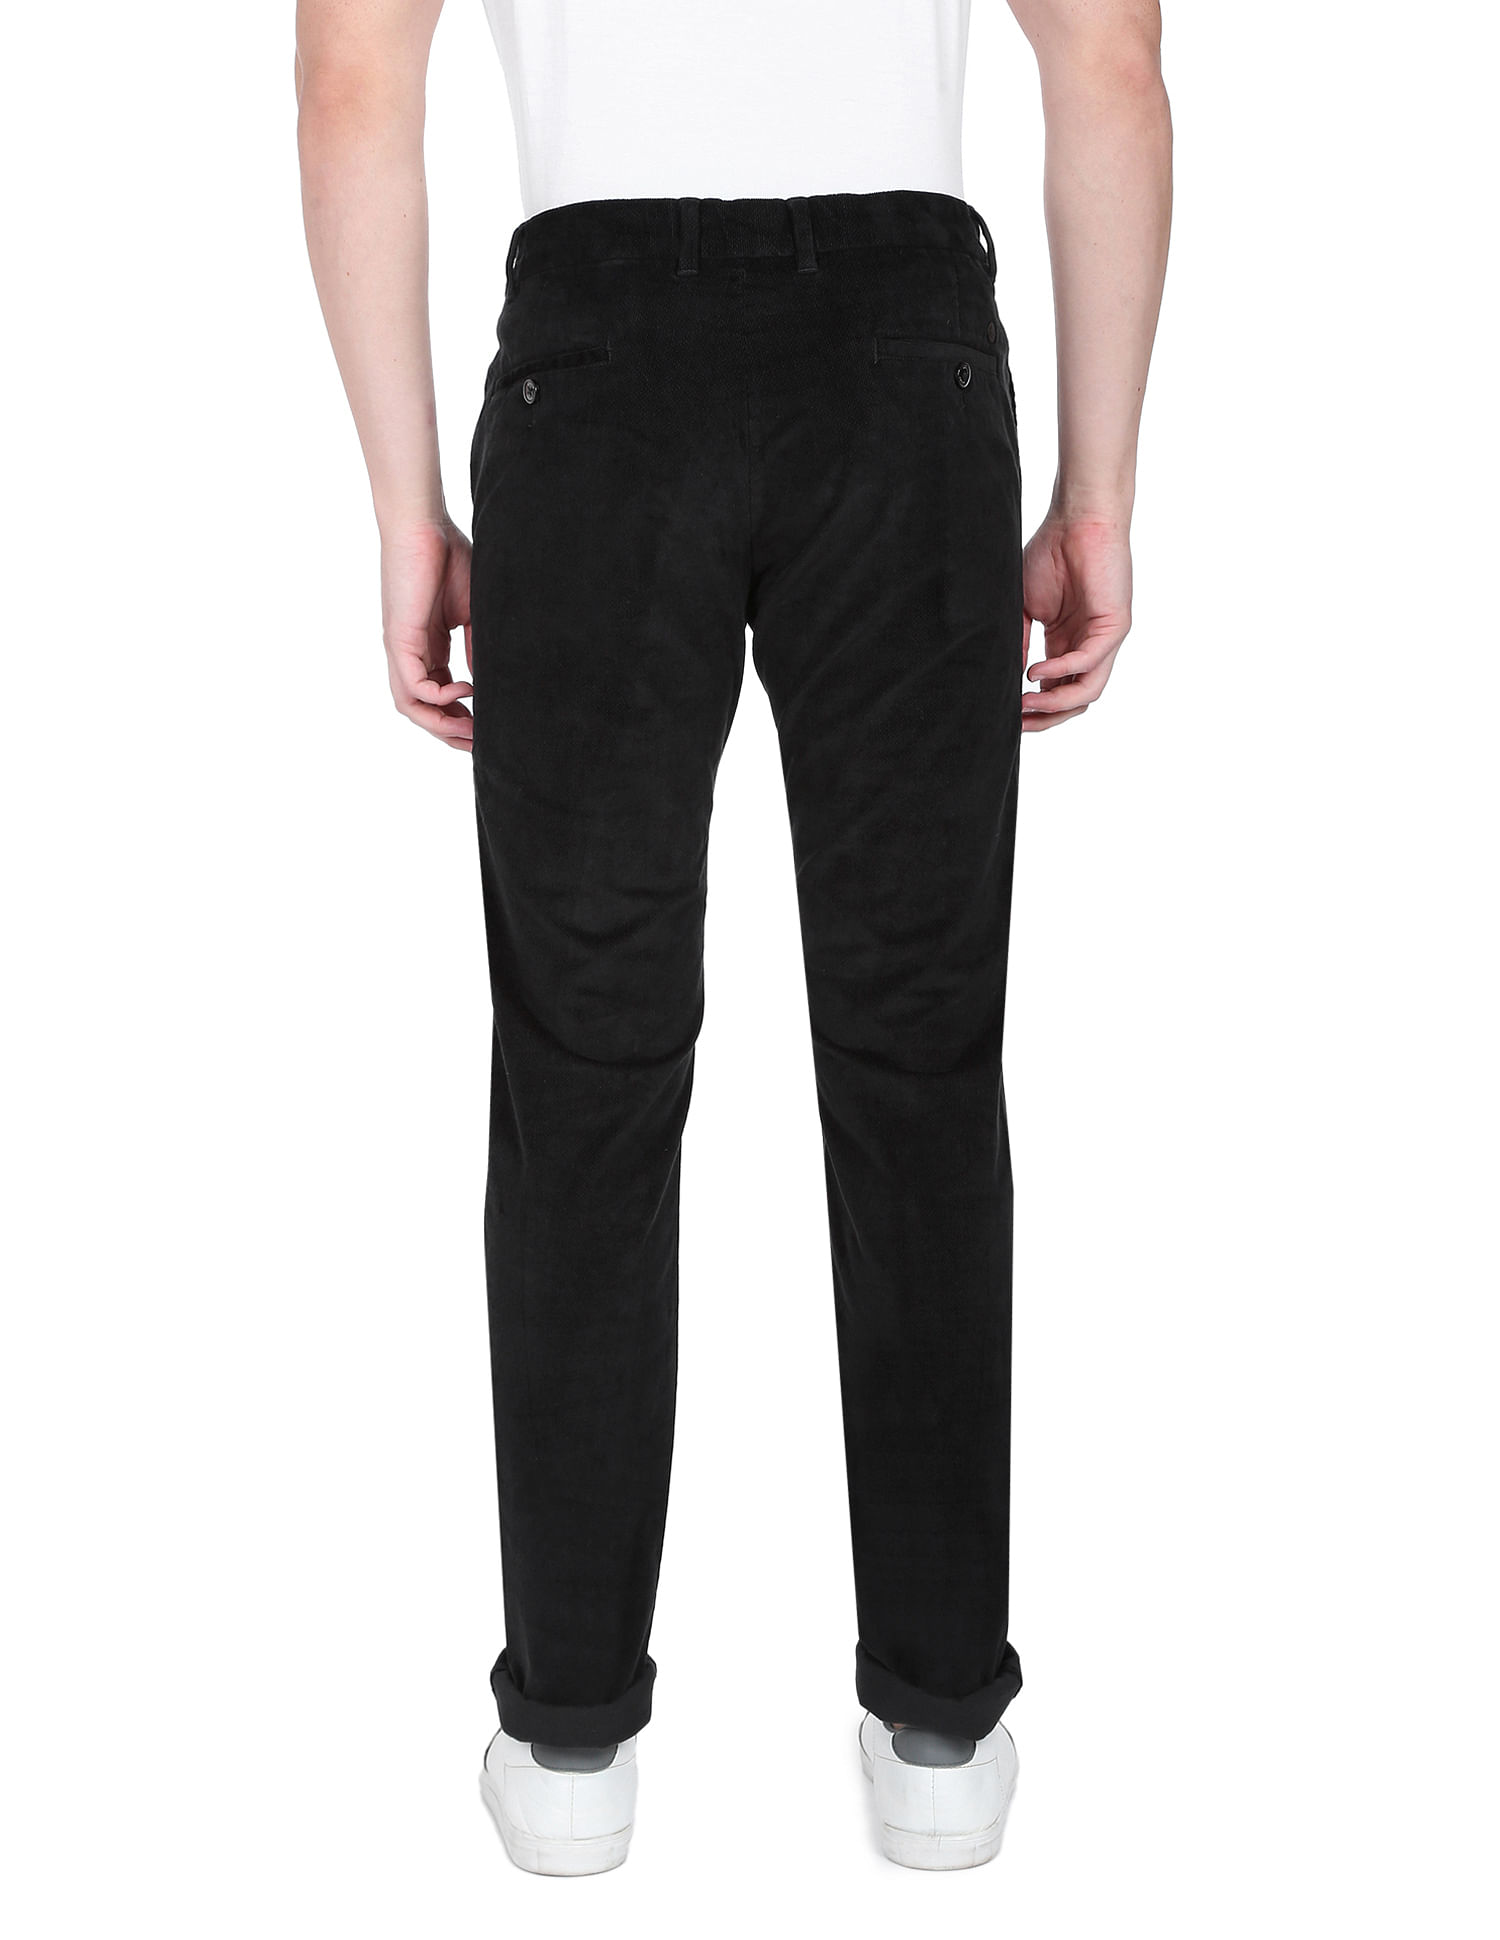 PJ PAUL JONES Men's Casual Pants Elastic Waist Drawstring Pants Slim Fit  Pleated Front Tapered Trousers Black at Amazon Men's Clothing store